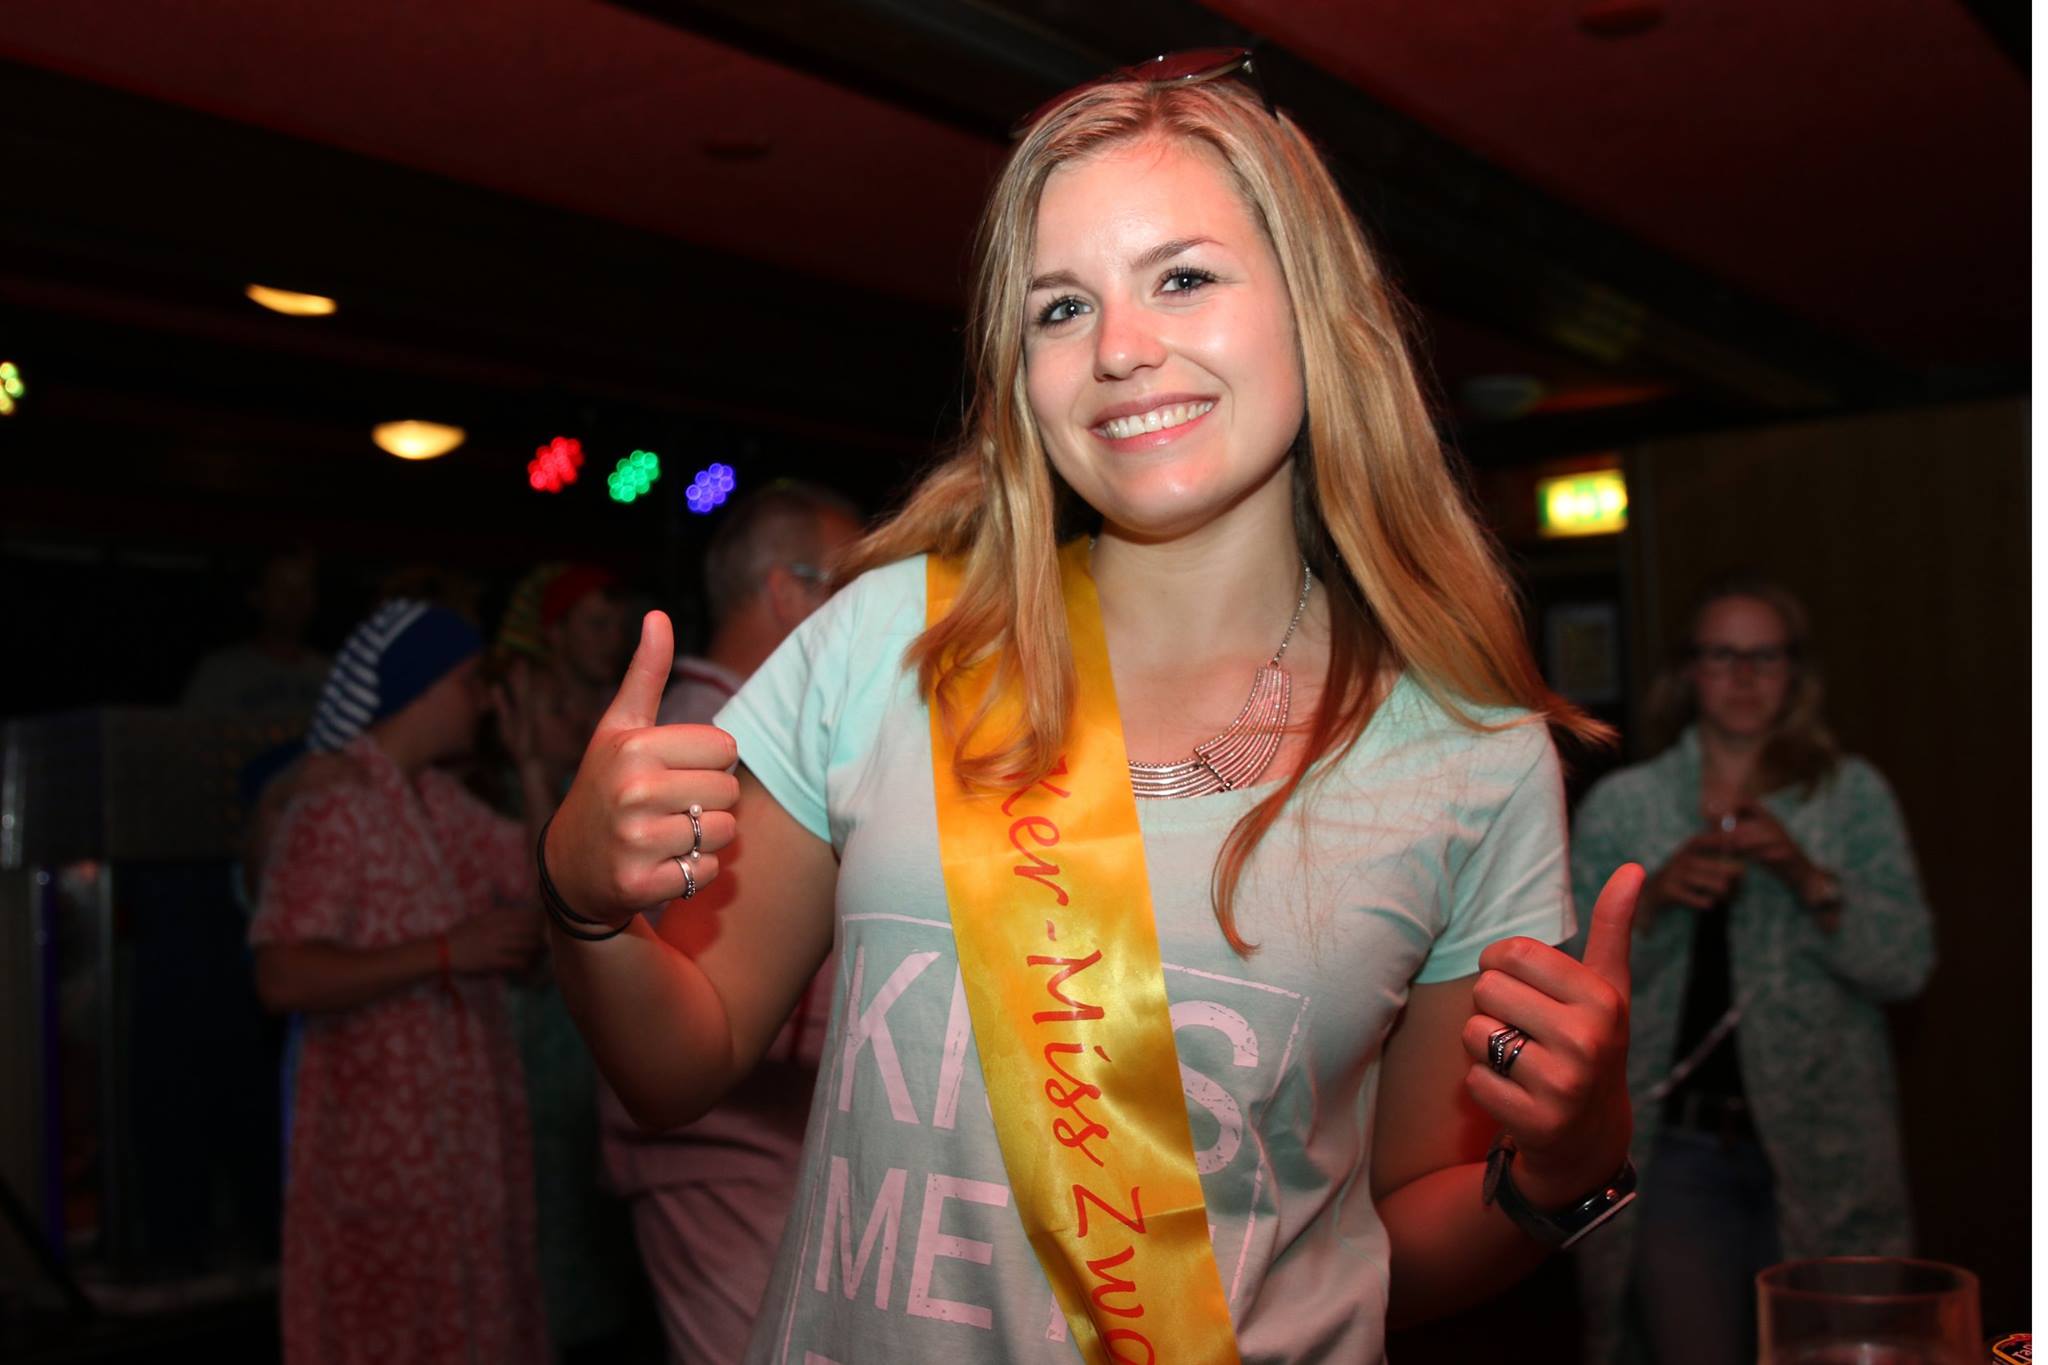 Melissa Bakker verkozen tot Miss Ker-miss 2015